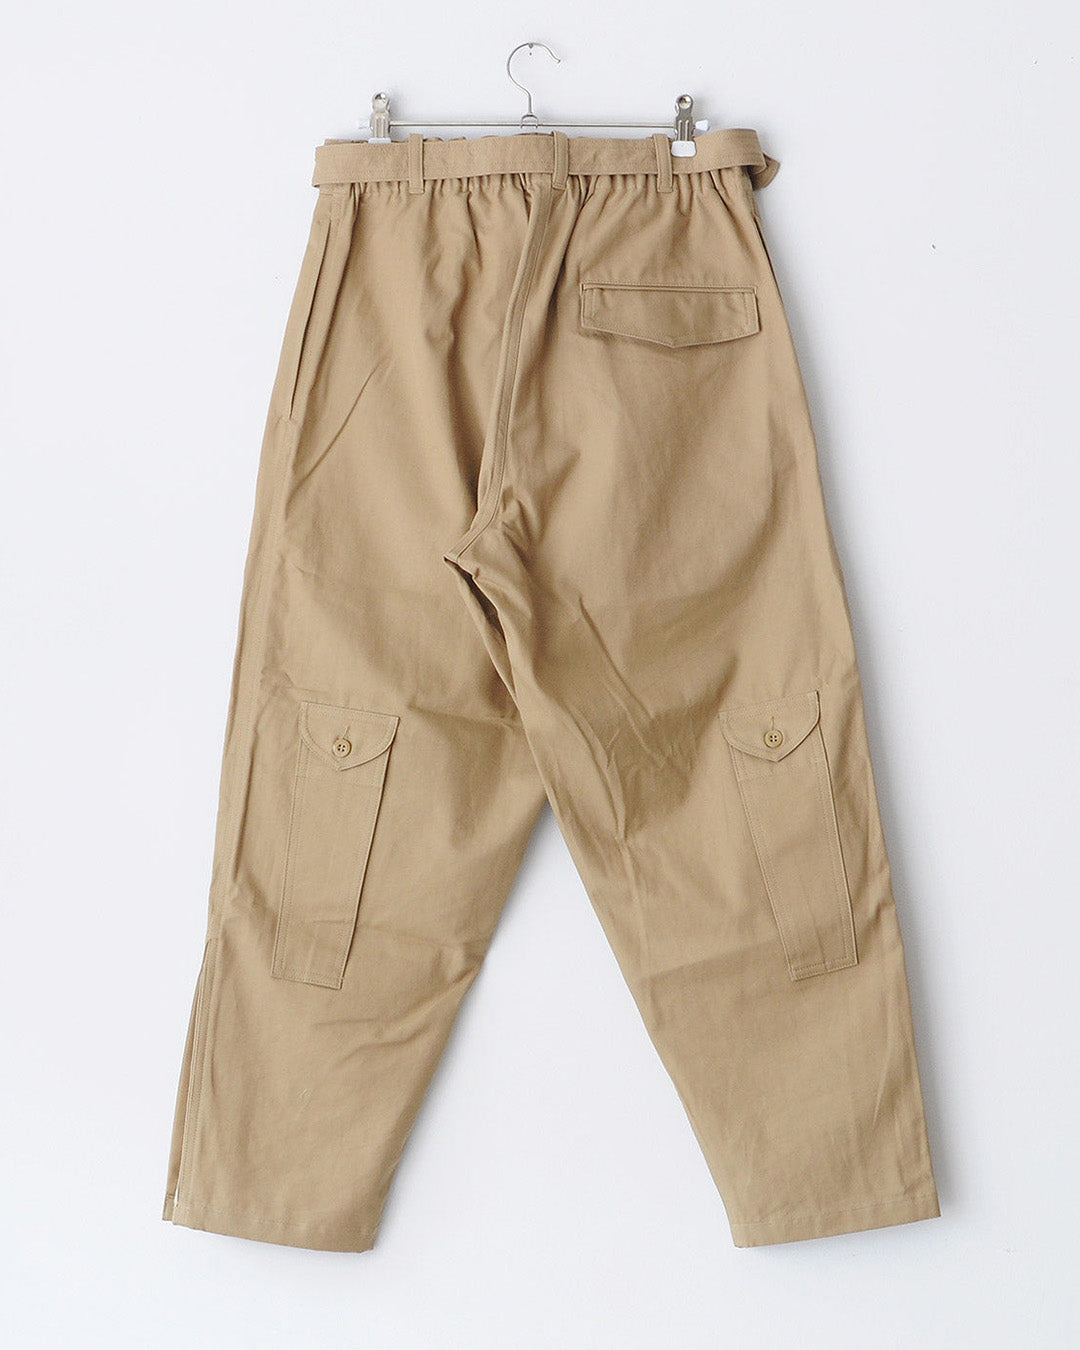 TUKI pilot pants / khaki / gabardine / size4